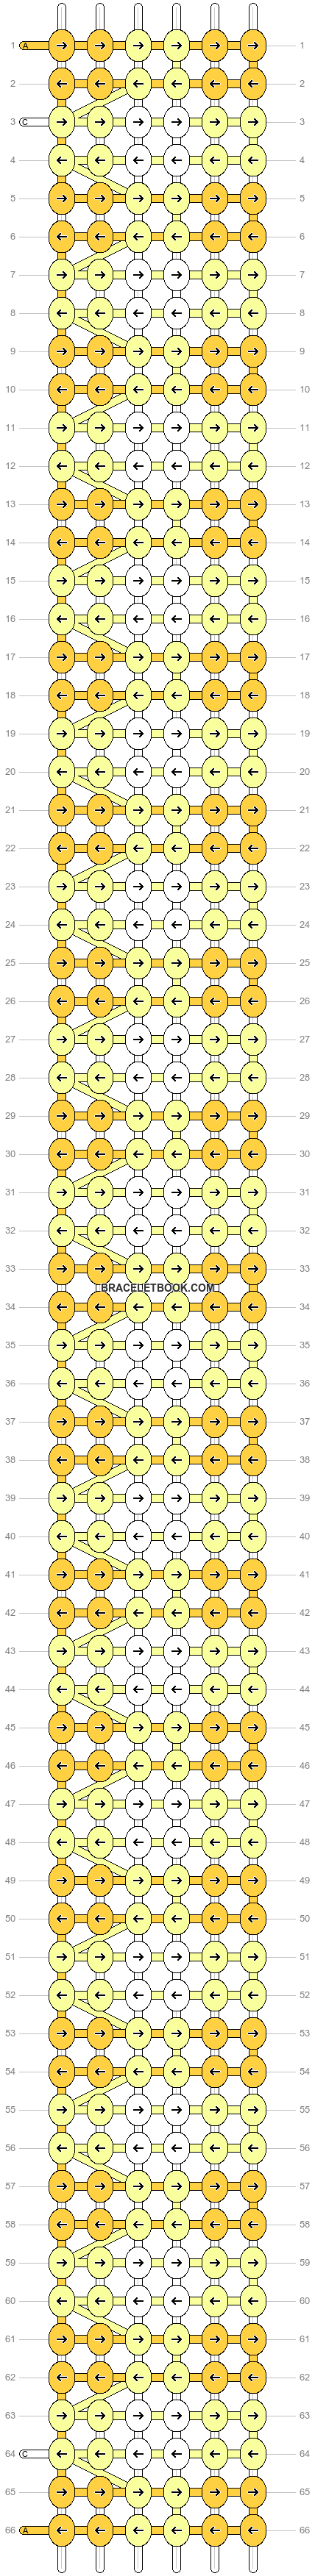 Alpha pattern #80755 variation #229769 pattern